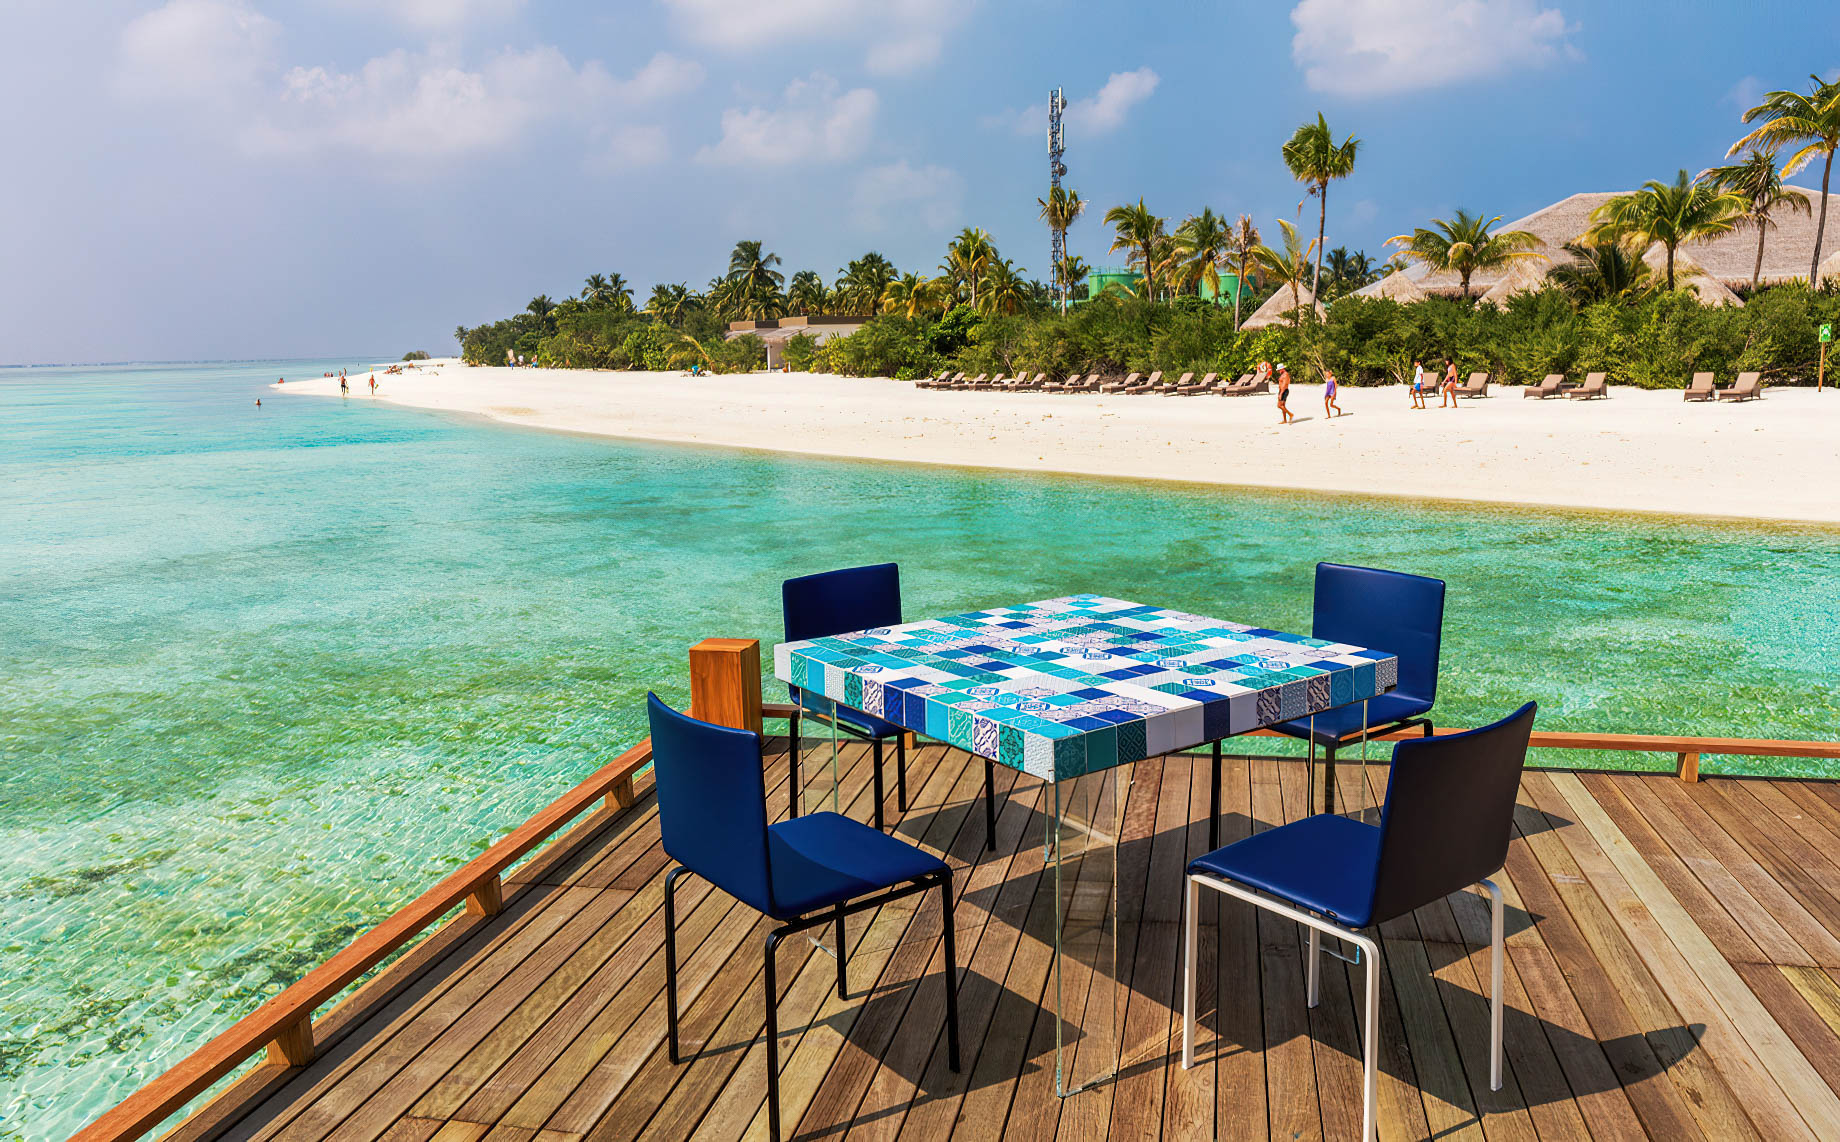 Cocoon Maldives Resort – Ookolhufinolhu, Lhaviyani Atoll, Maldives – Manta Overwater Restaurant Dining Table